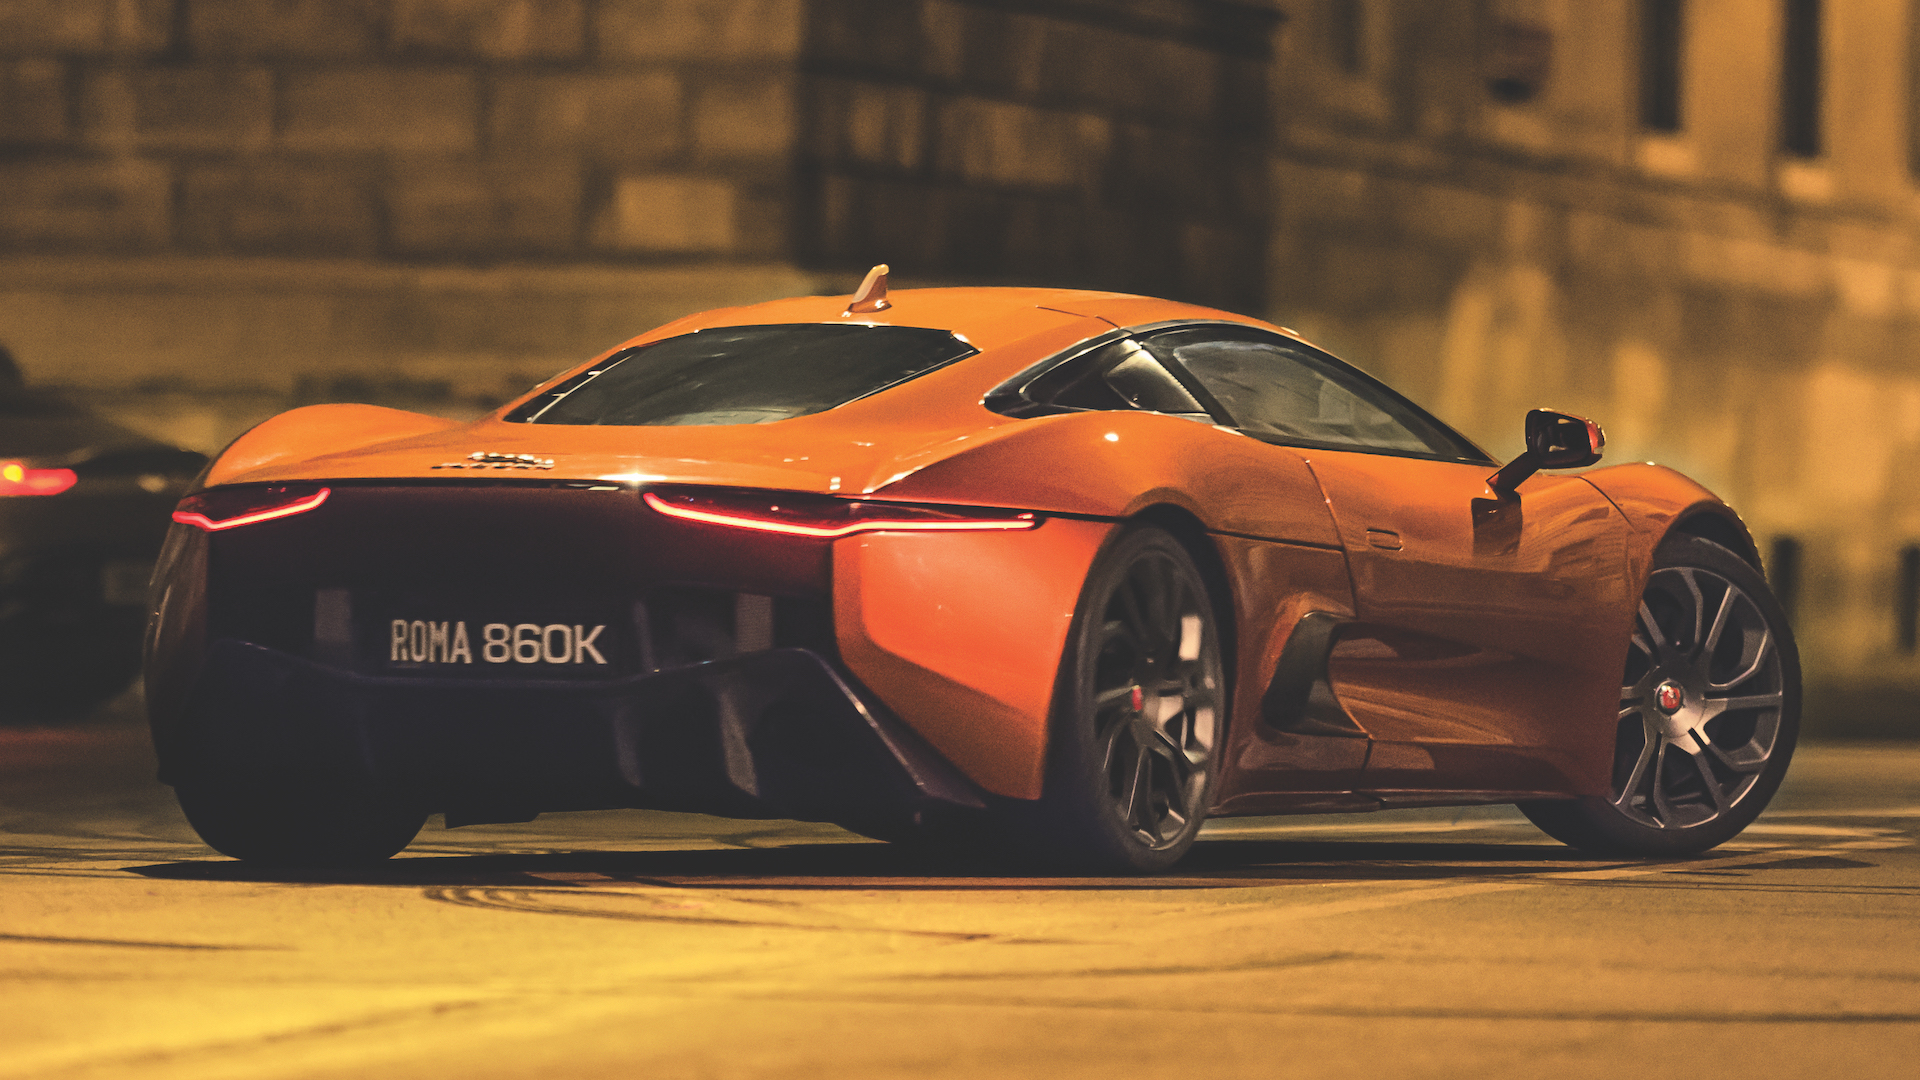 Hinx's Jaguar chasing Bond's Aston on the Corso Vittorio in Rome. Movie car circa 2015.